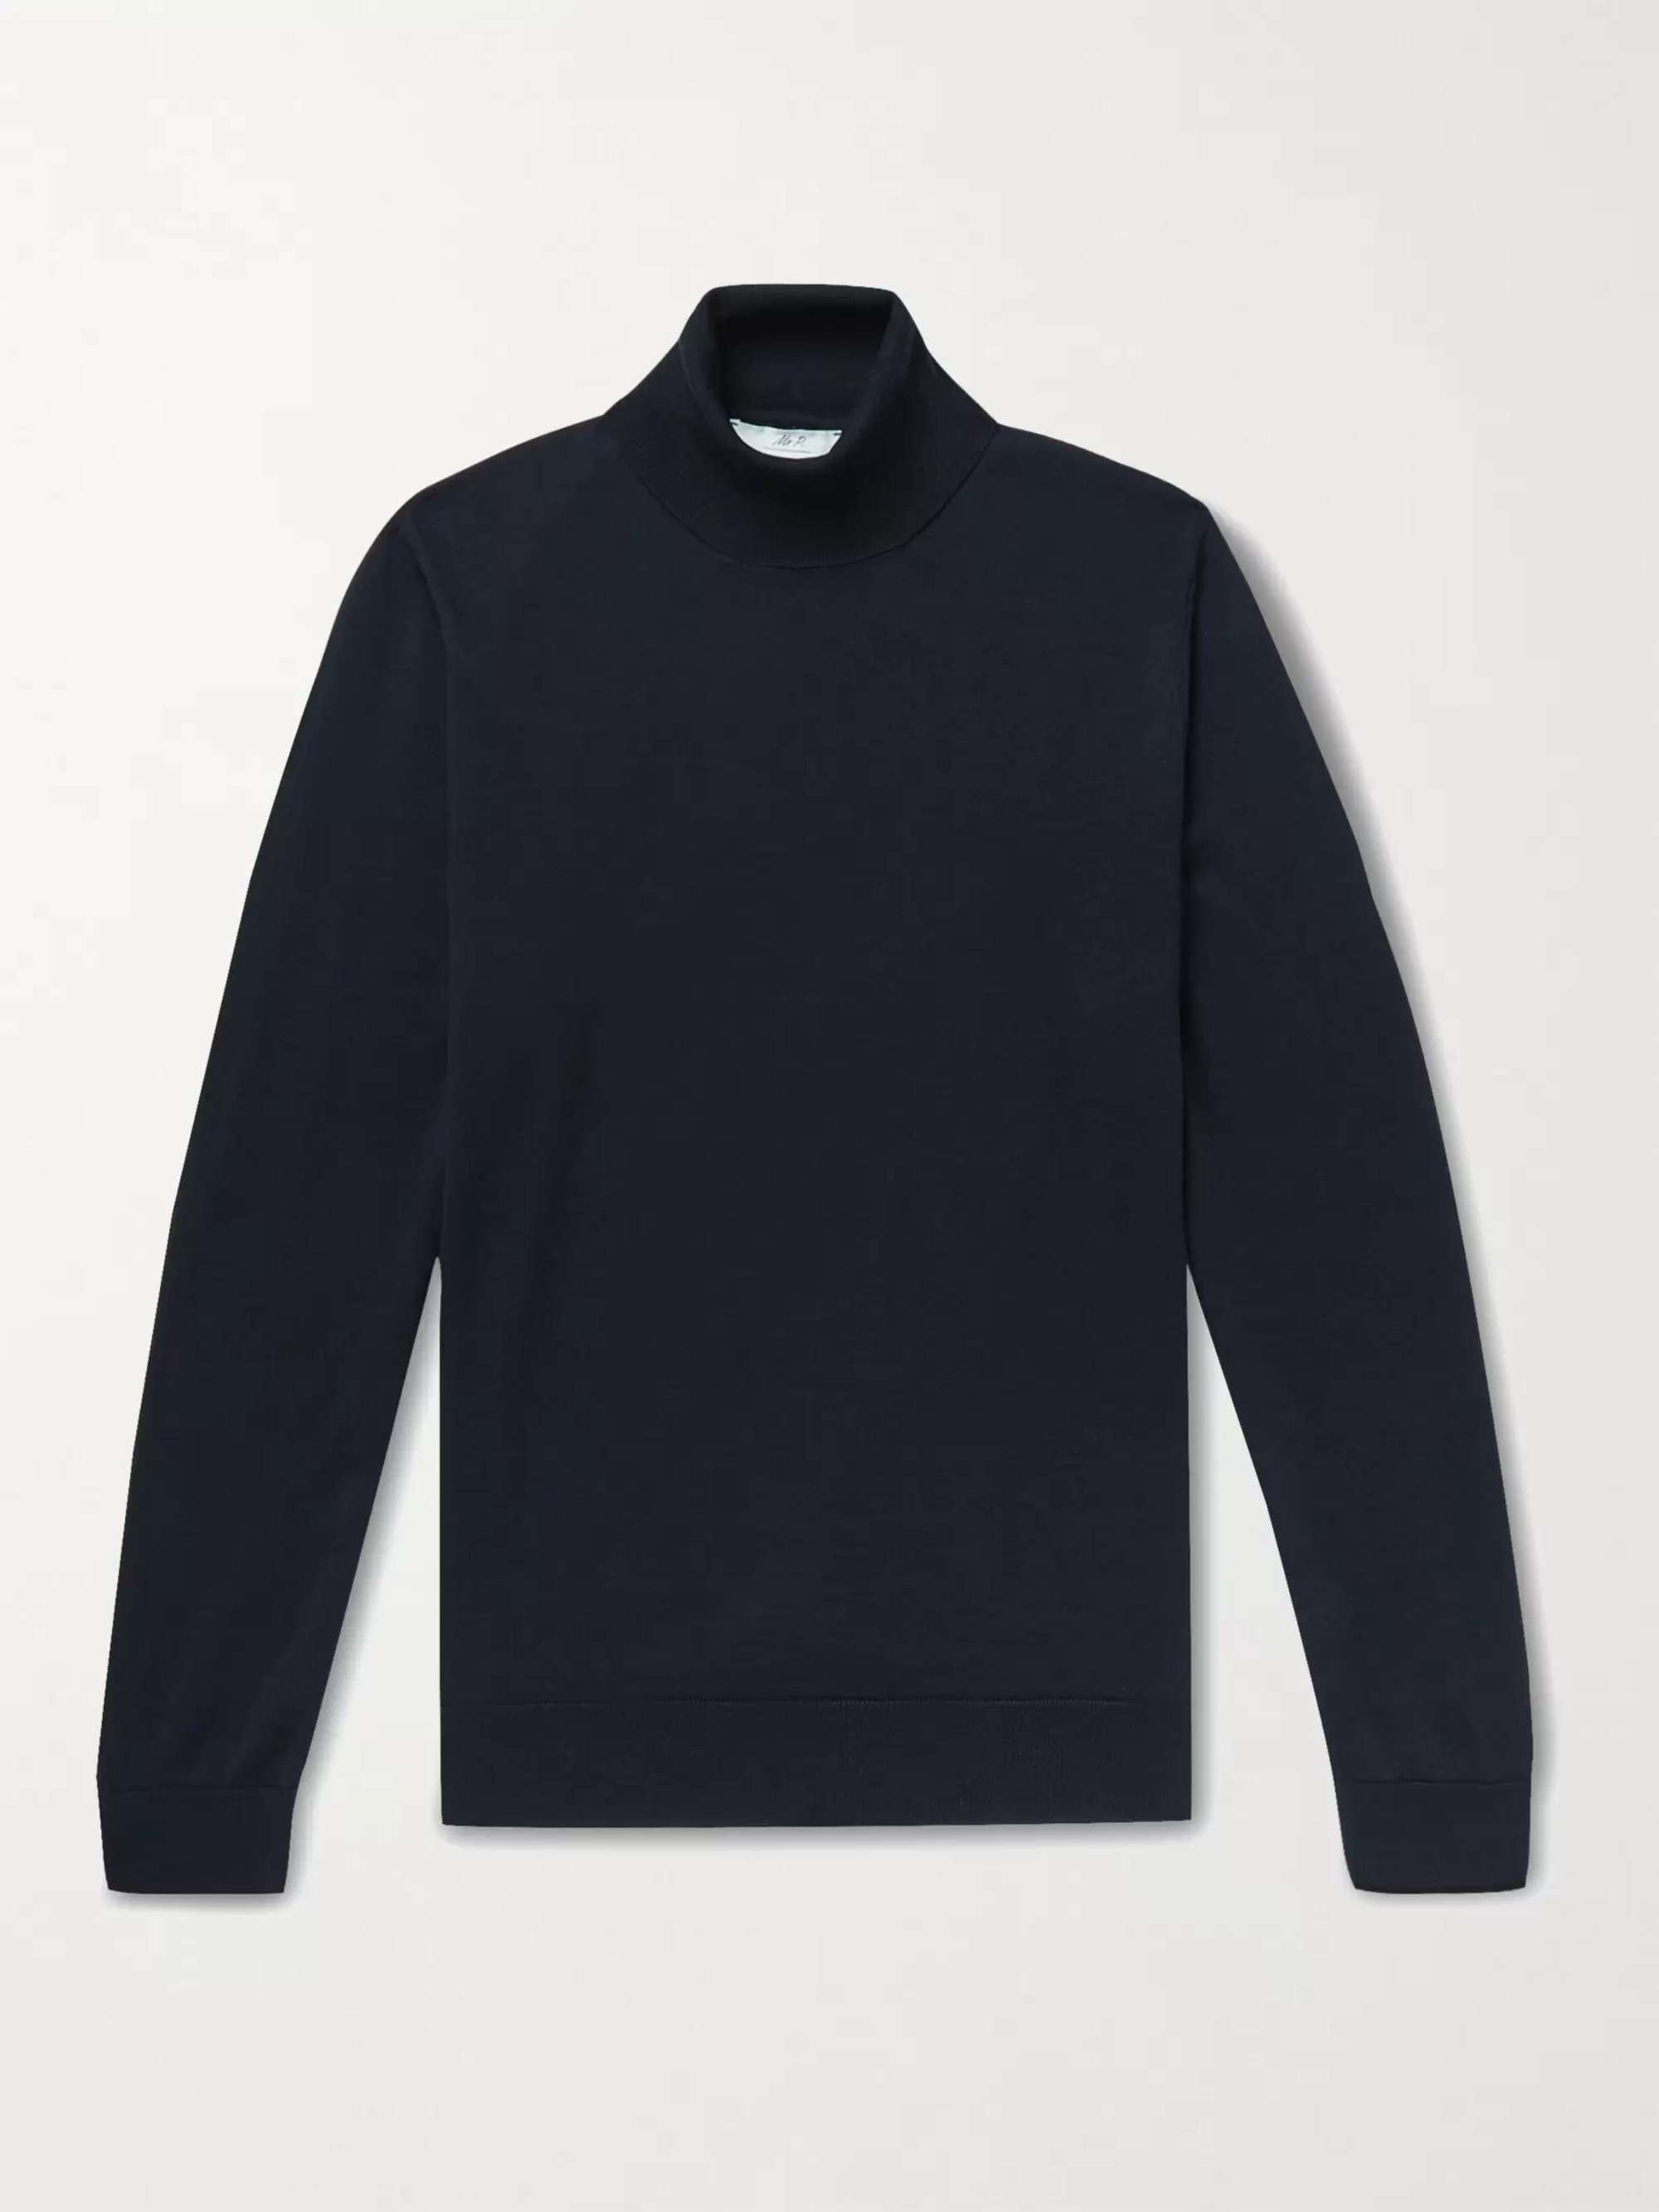 MR P. Slim-Fit Merino Wool Rollneck Sweater